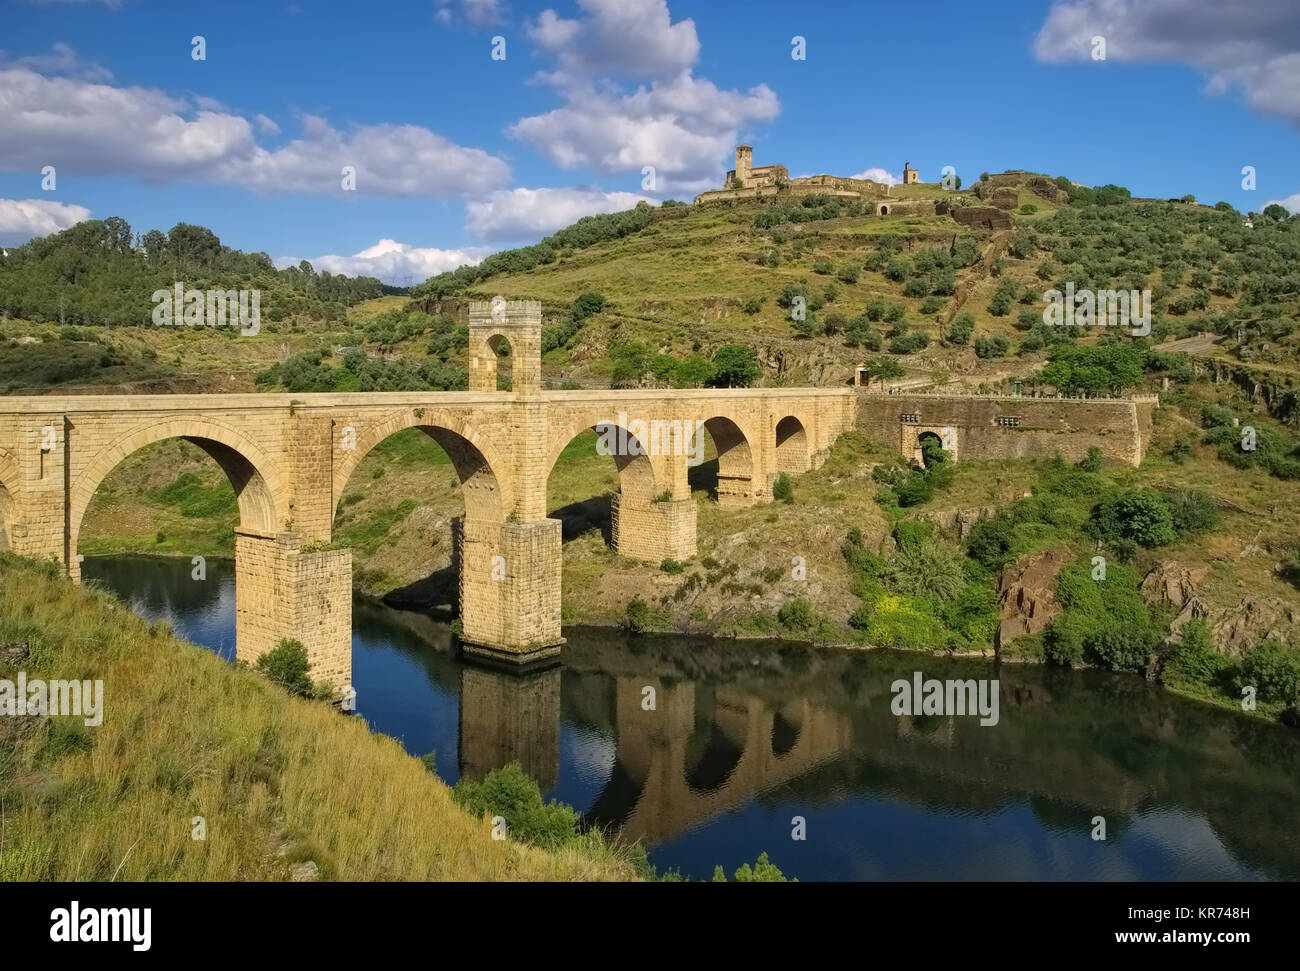 römische Brücke Alcantara in Spanien - Puente de Alcantara, Rio Tajo in Spain Stock Photo